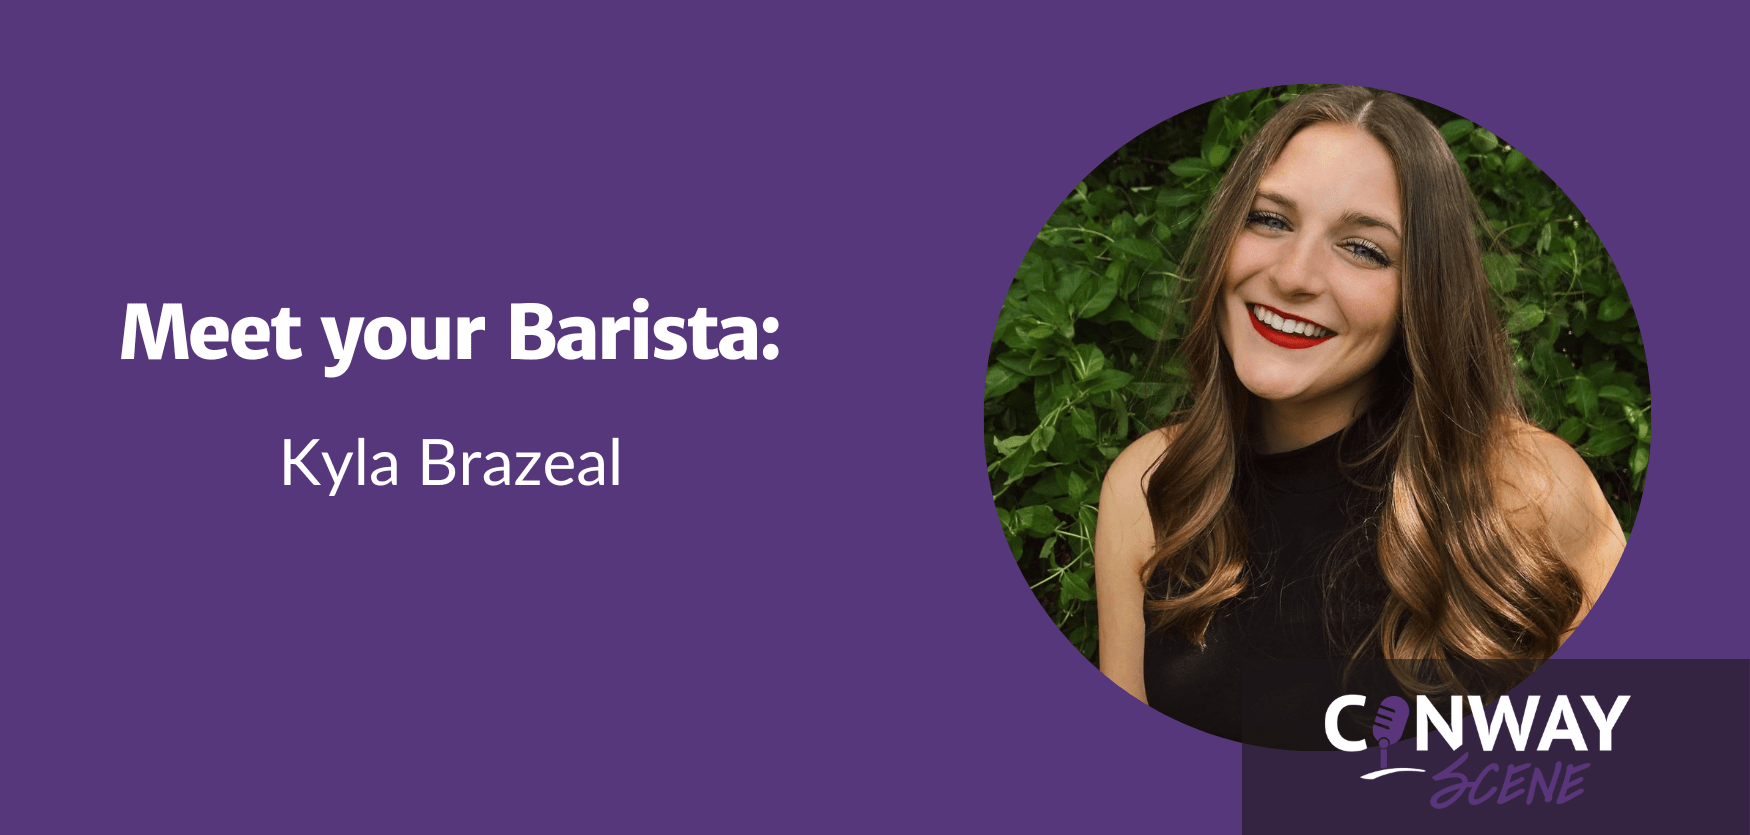 Meet your Barista Kyla Brazeal